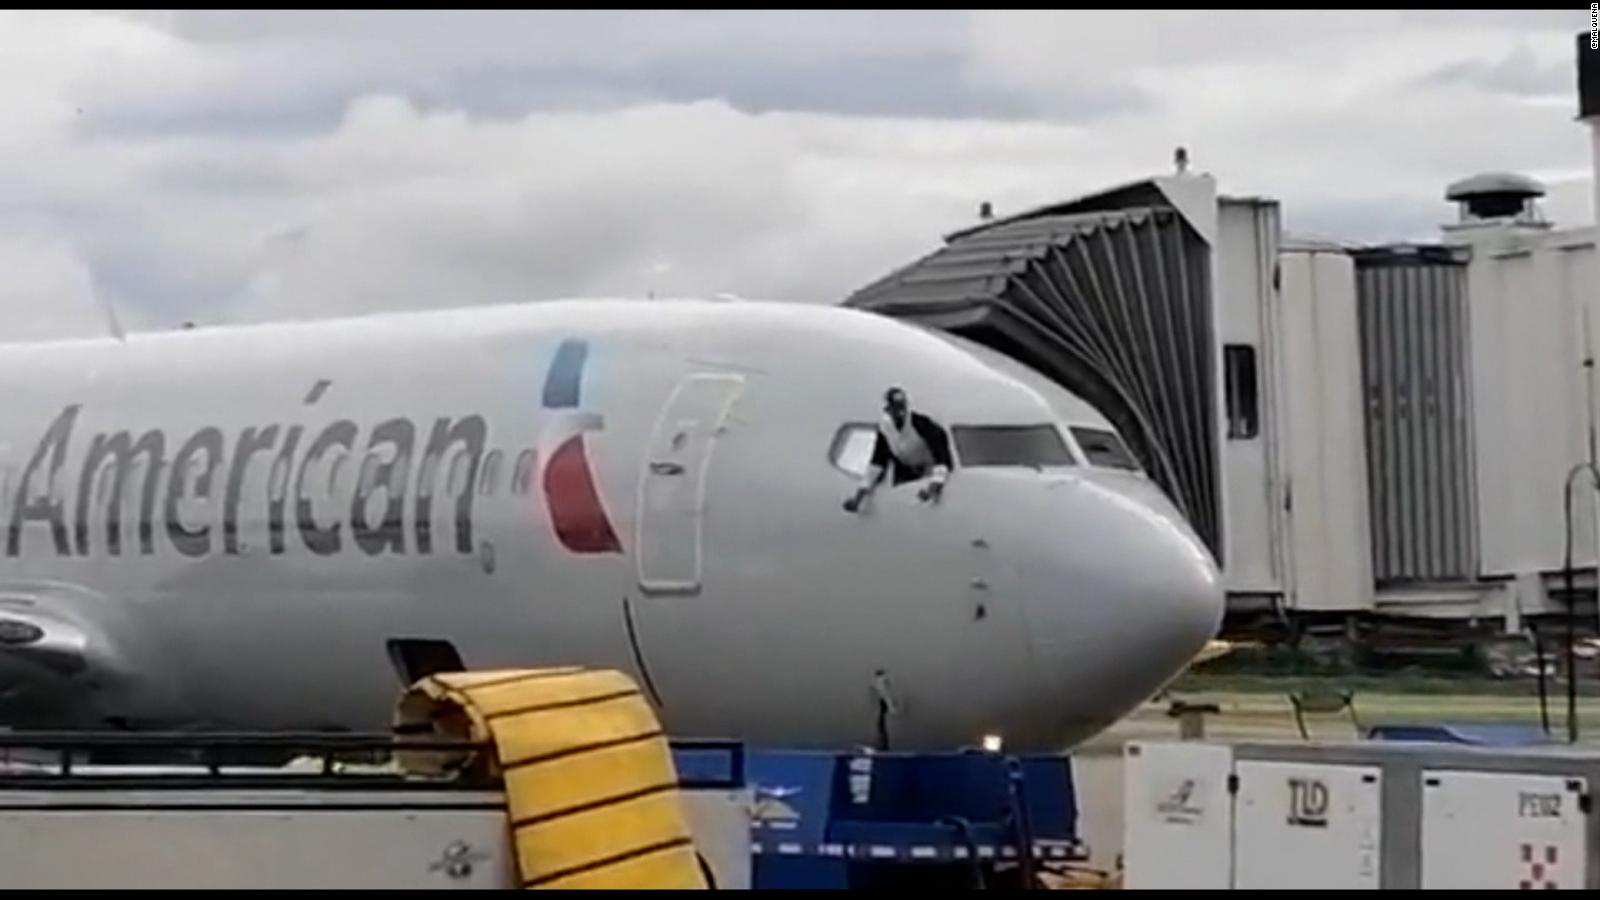 Man storms cockpit on American Airlines flight, breaks controls CNN Video